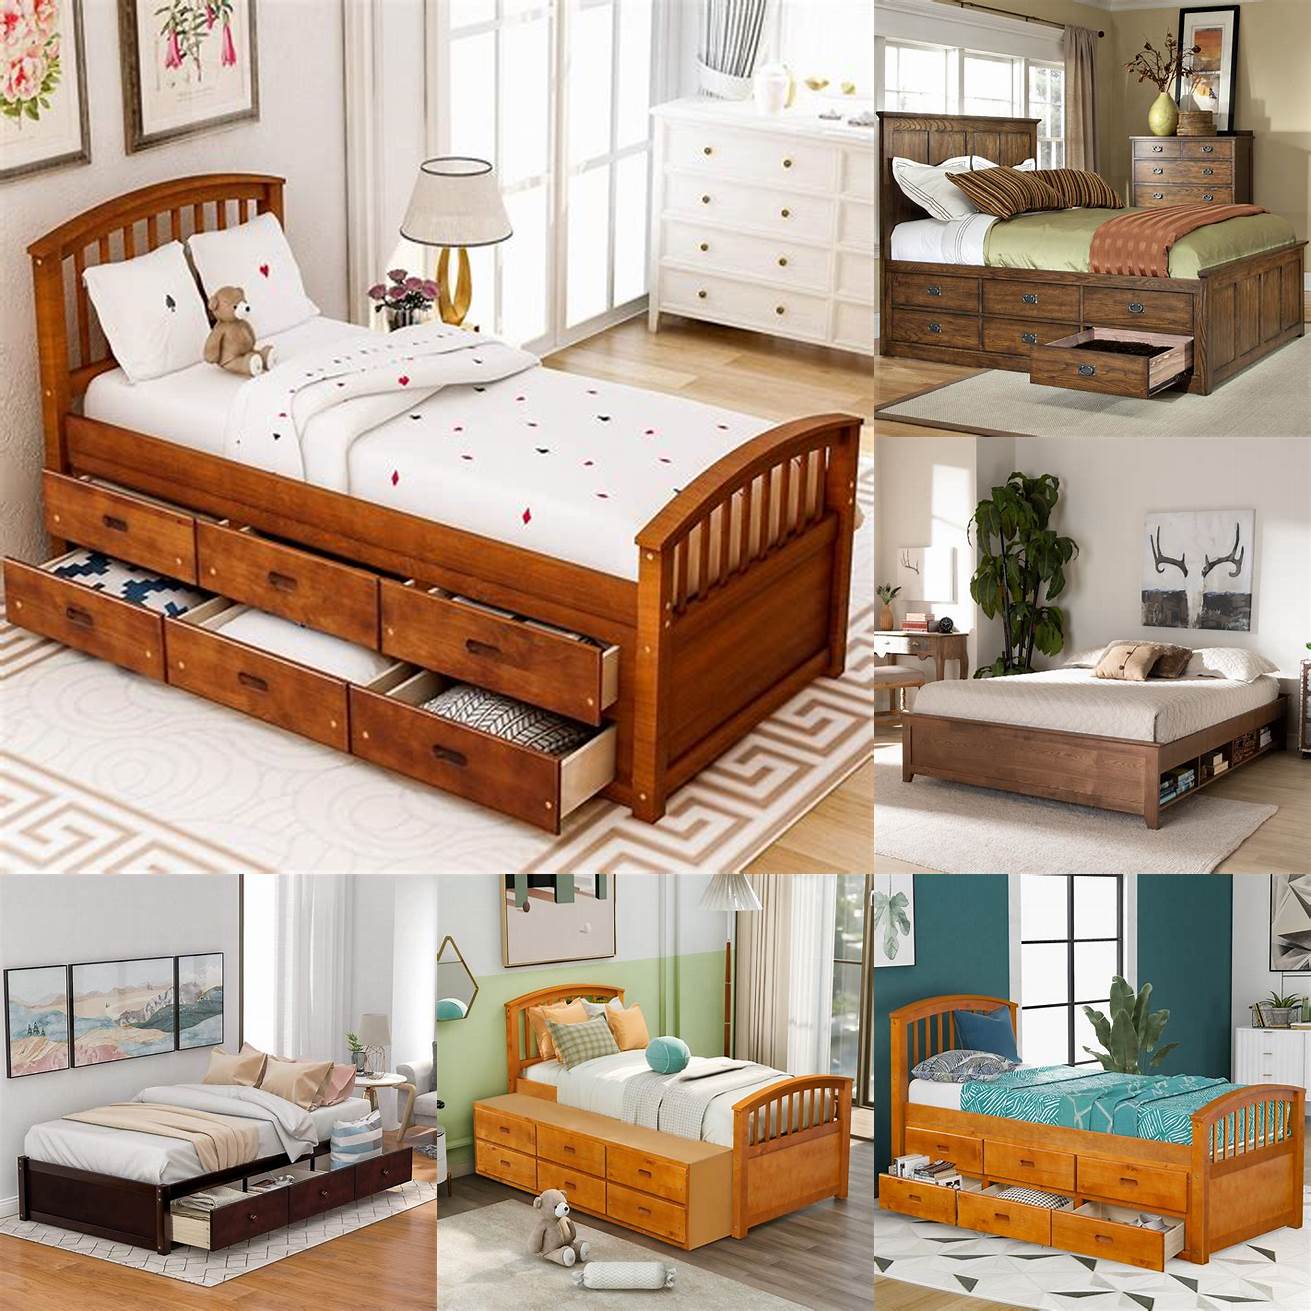 Wooden platform bed with storage drawers